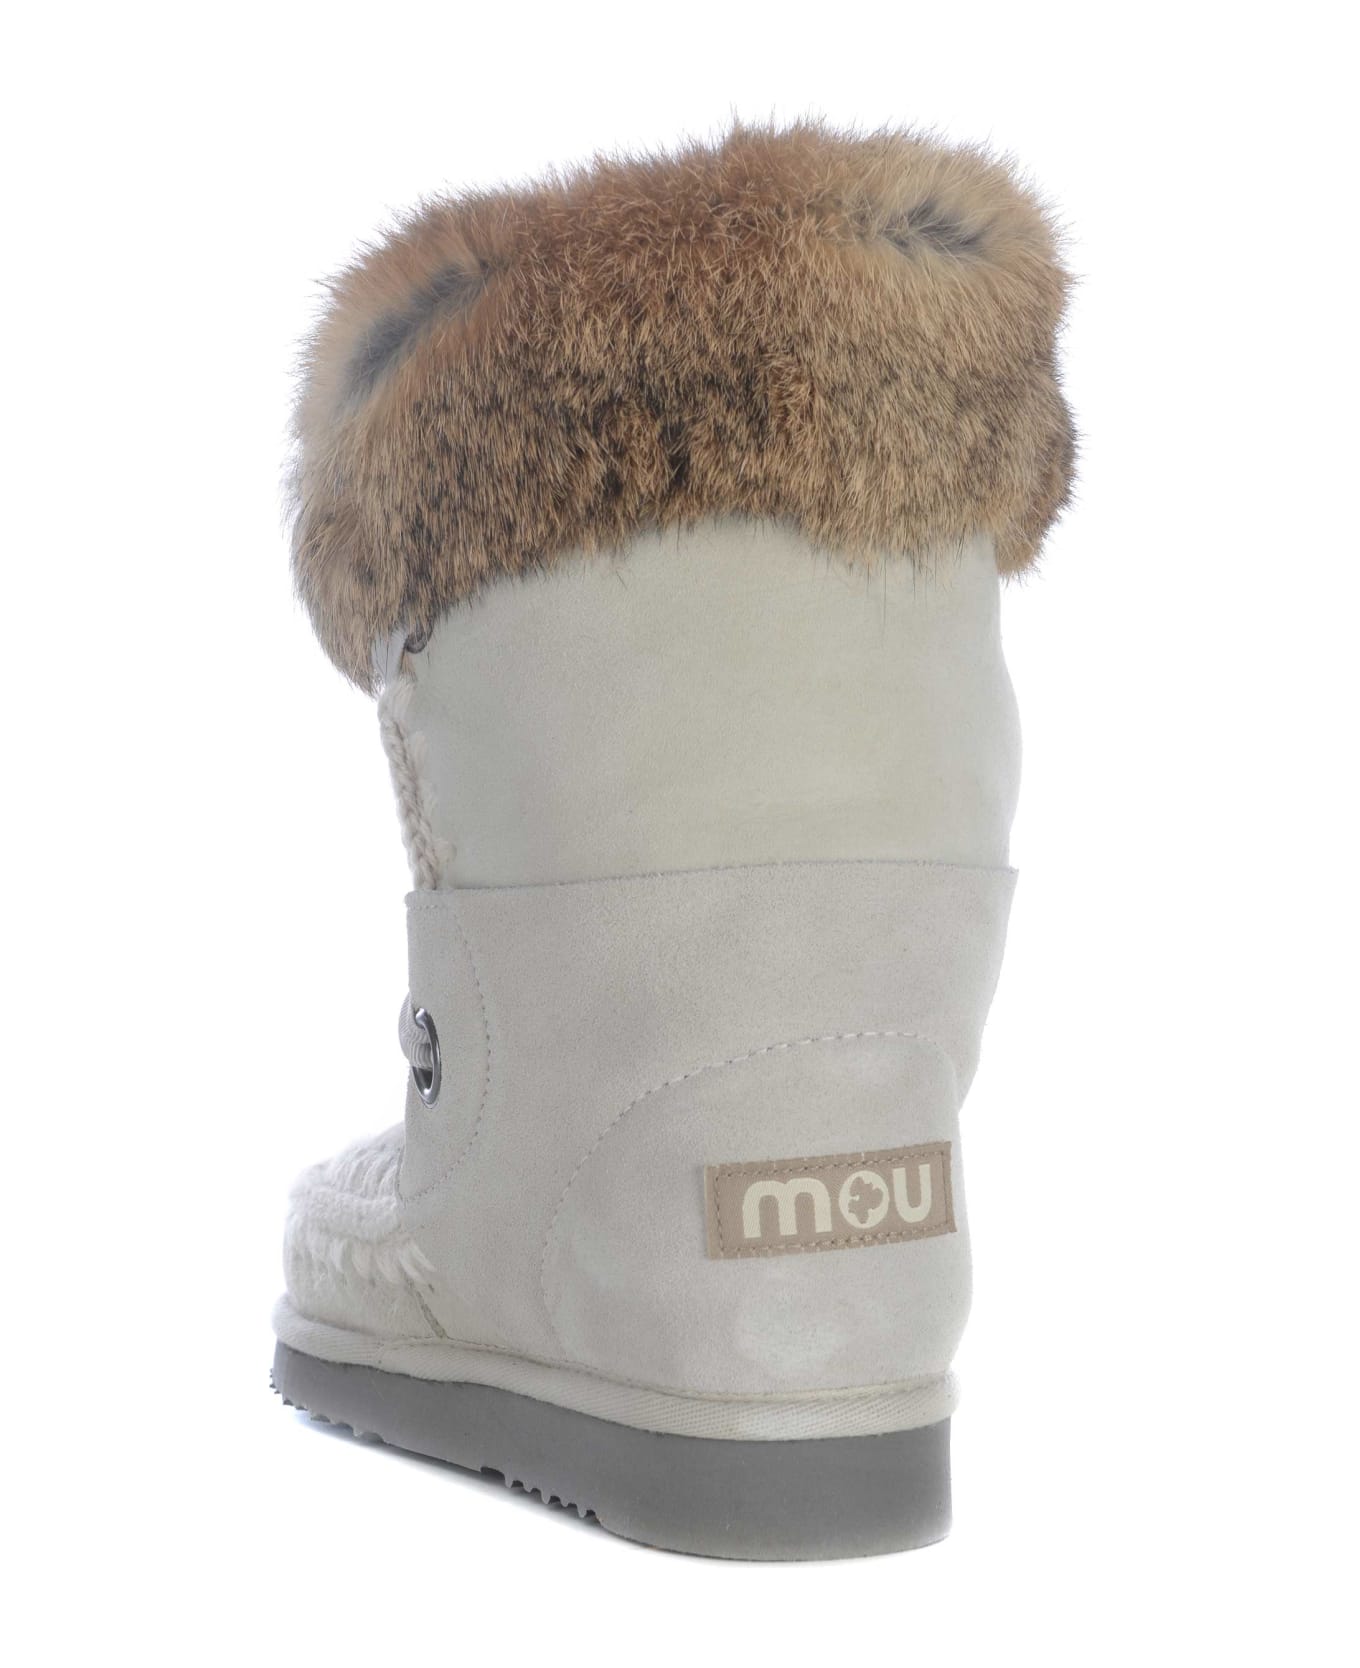 Mou Boots Mou "eskimolace" Made In Suede - Ghiaccio